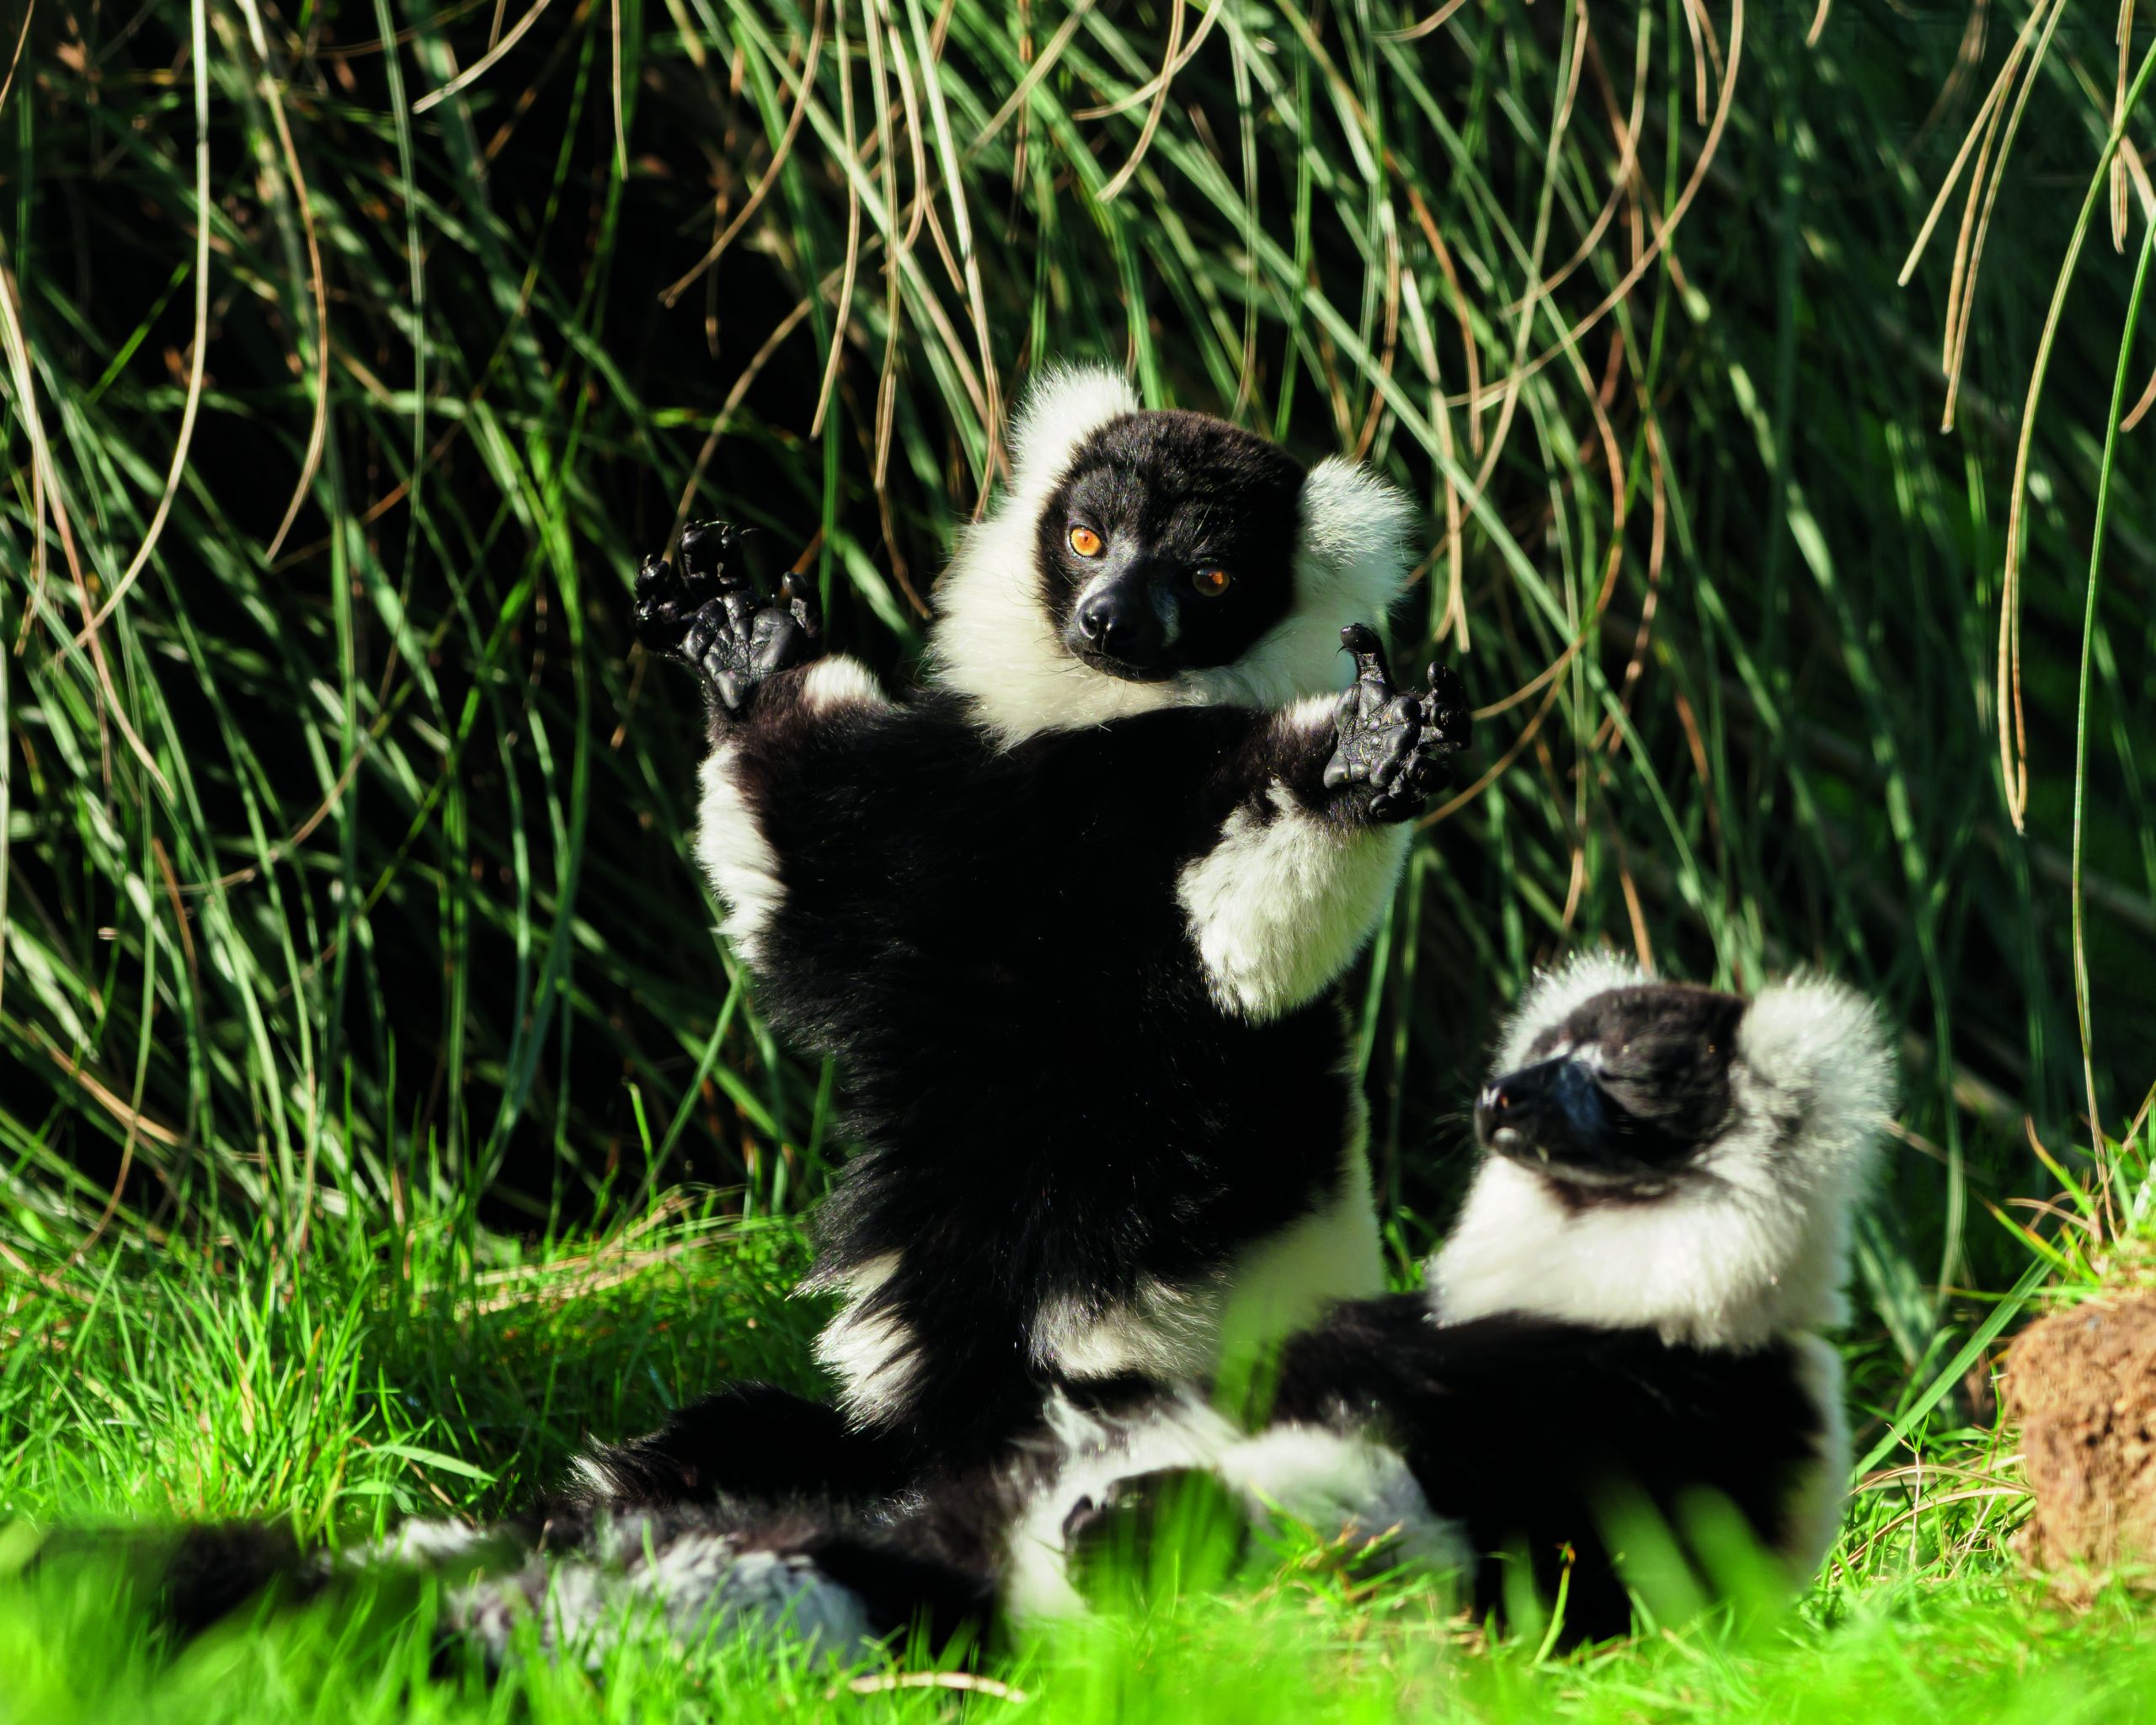 Black & white ruffled lemurs at Wildheart Animal Sanctuary (photo thanks to Chris Boyce & The Wildheart Trust)